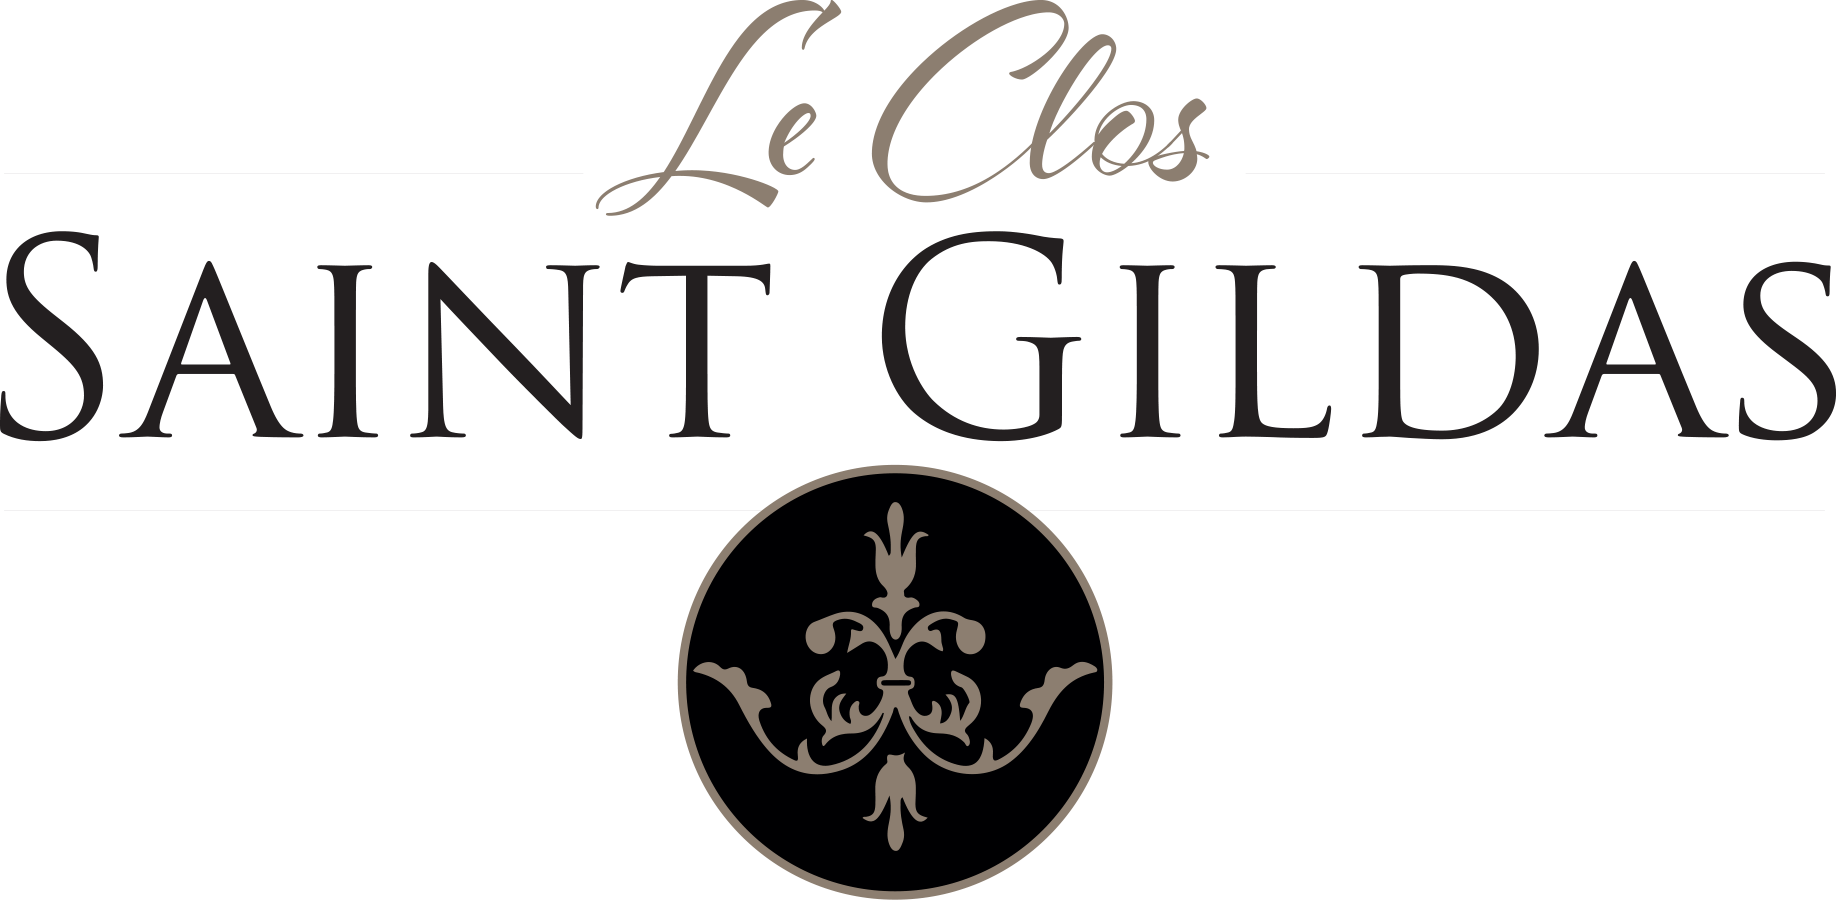 Résidence Services Seniors Le Clos Saint Gildas